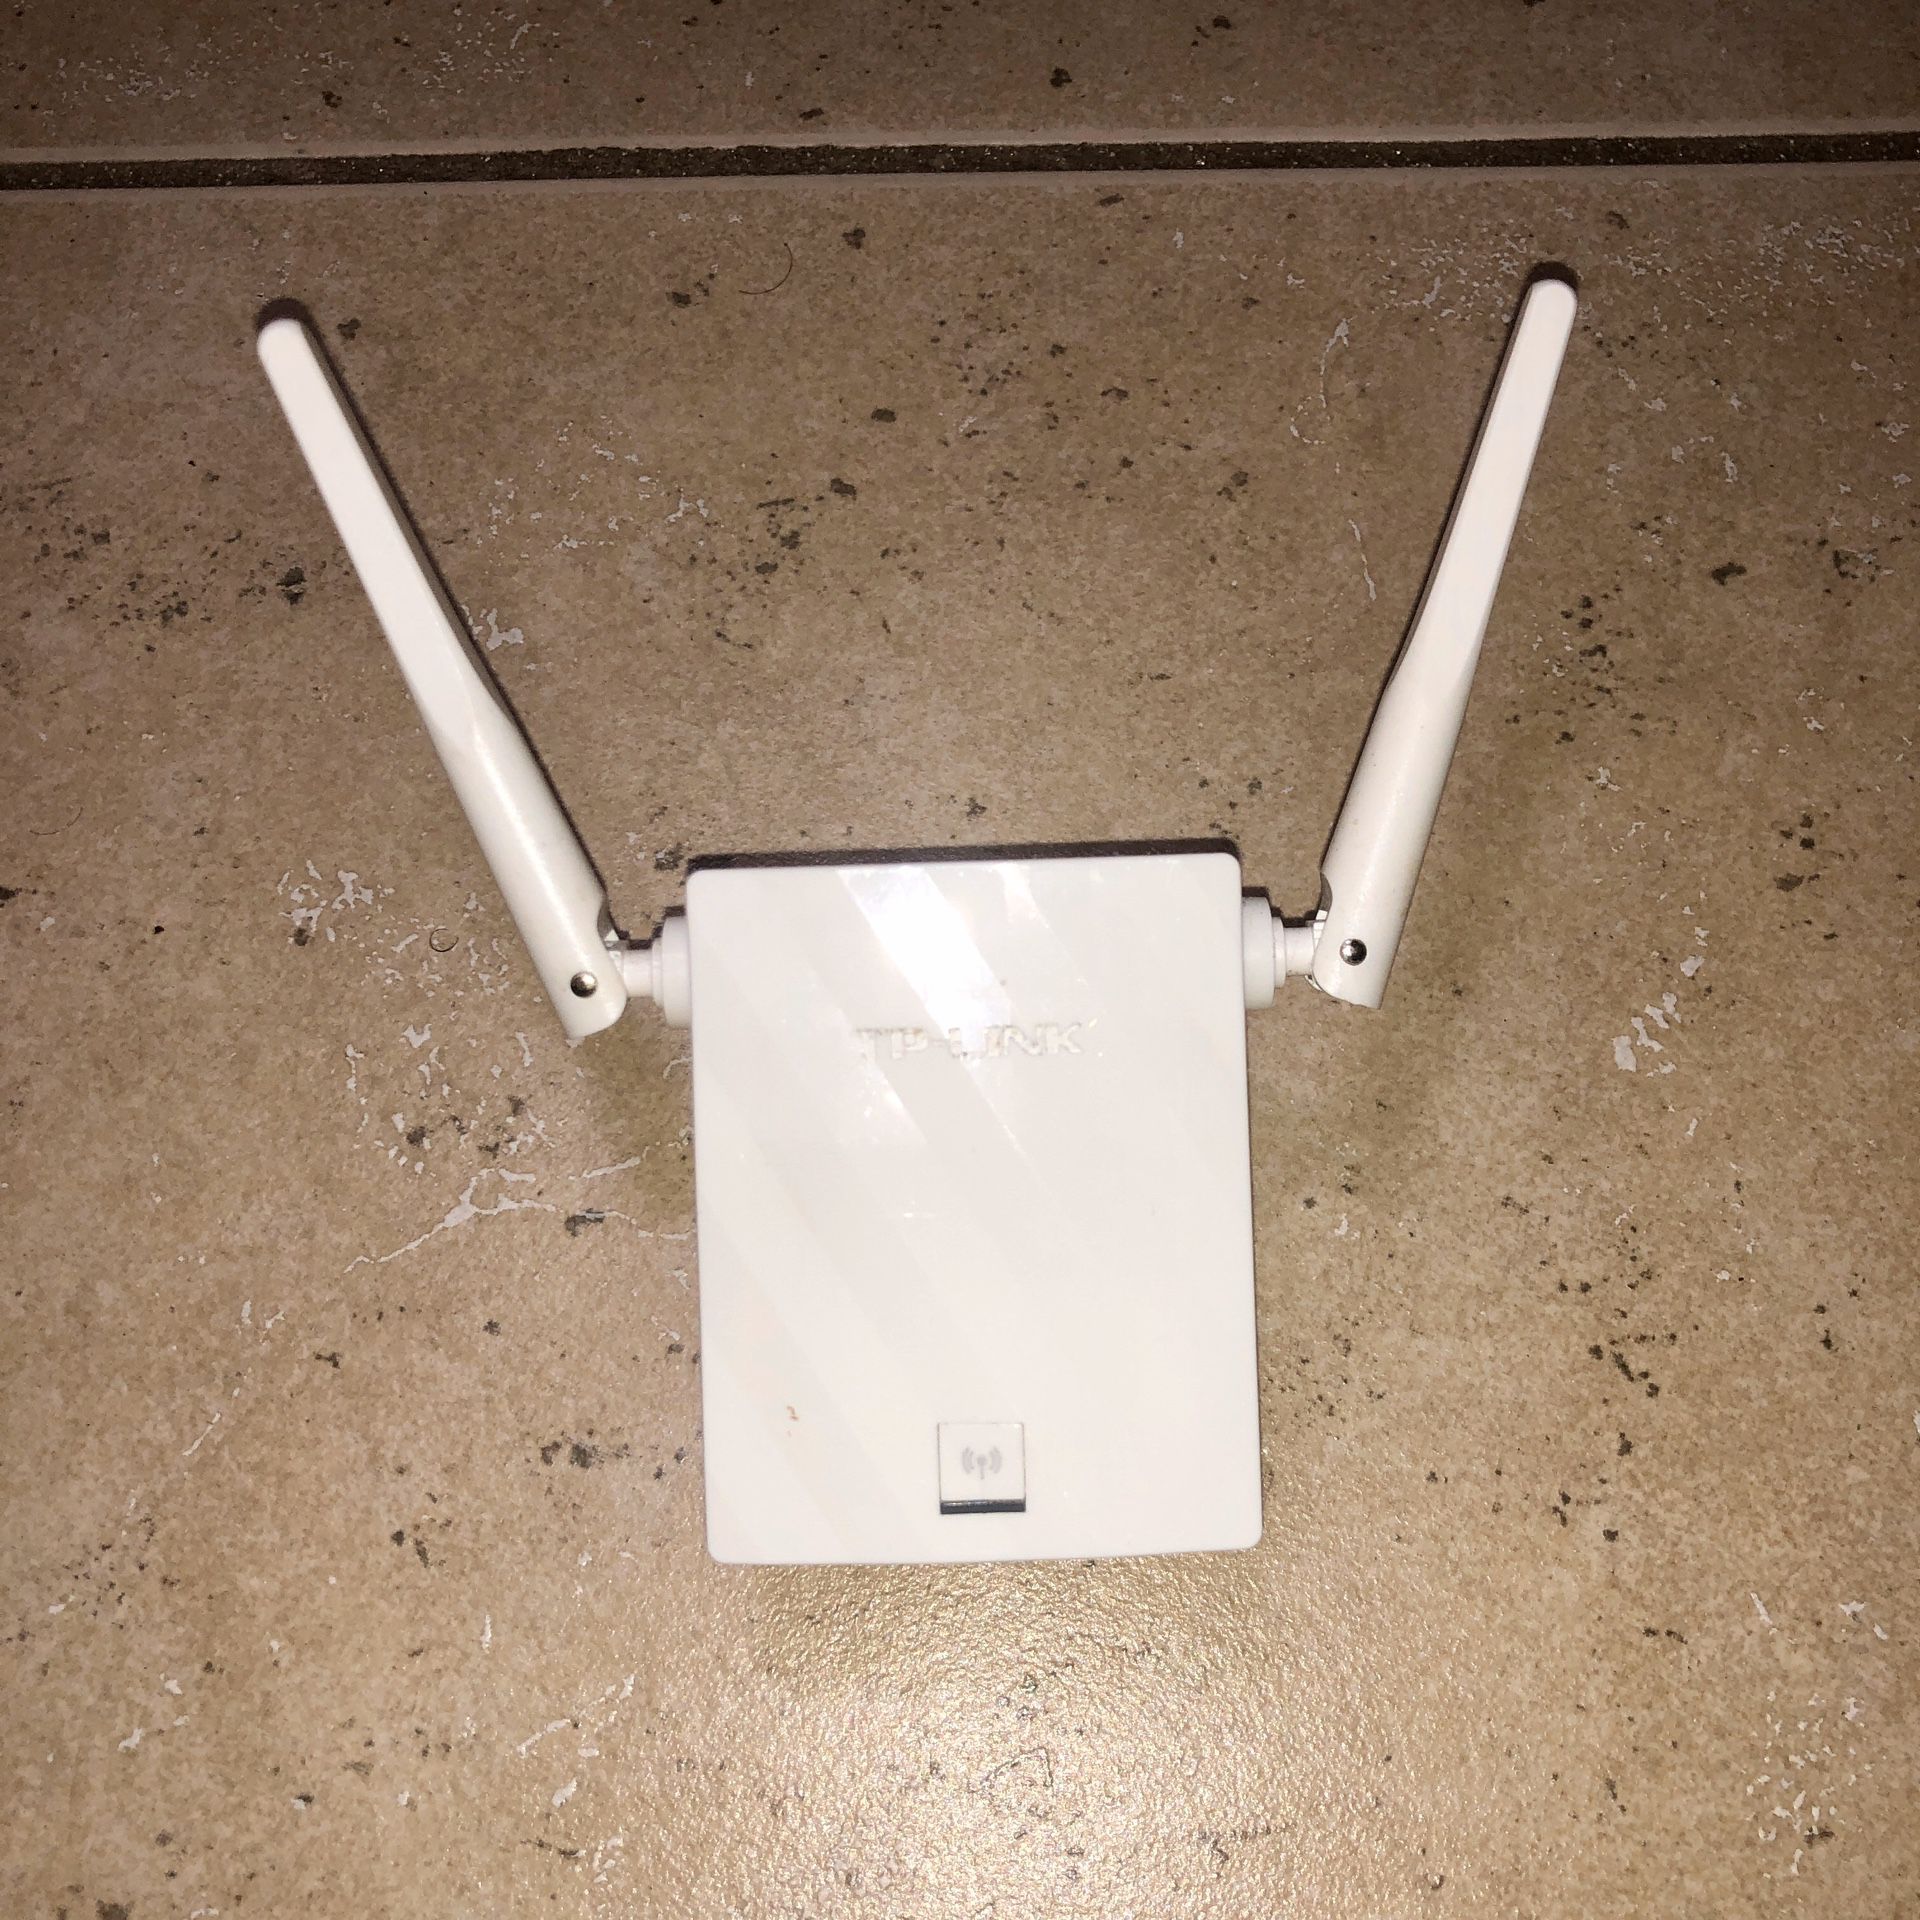 TP-Link N300 WiFi Range Extender | WiFi Signal Booster TL-WA855RE